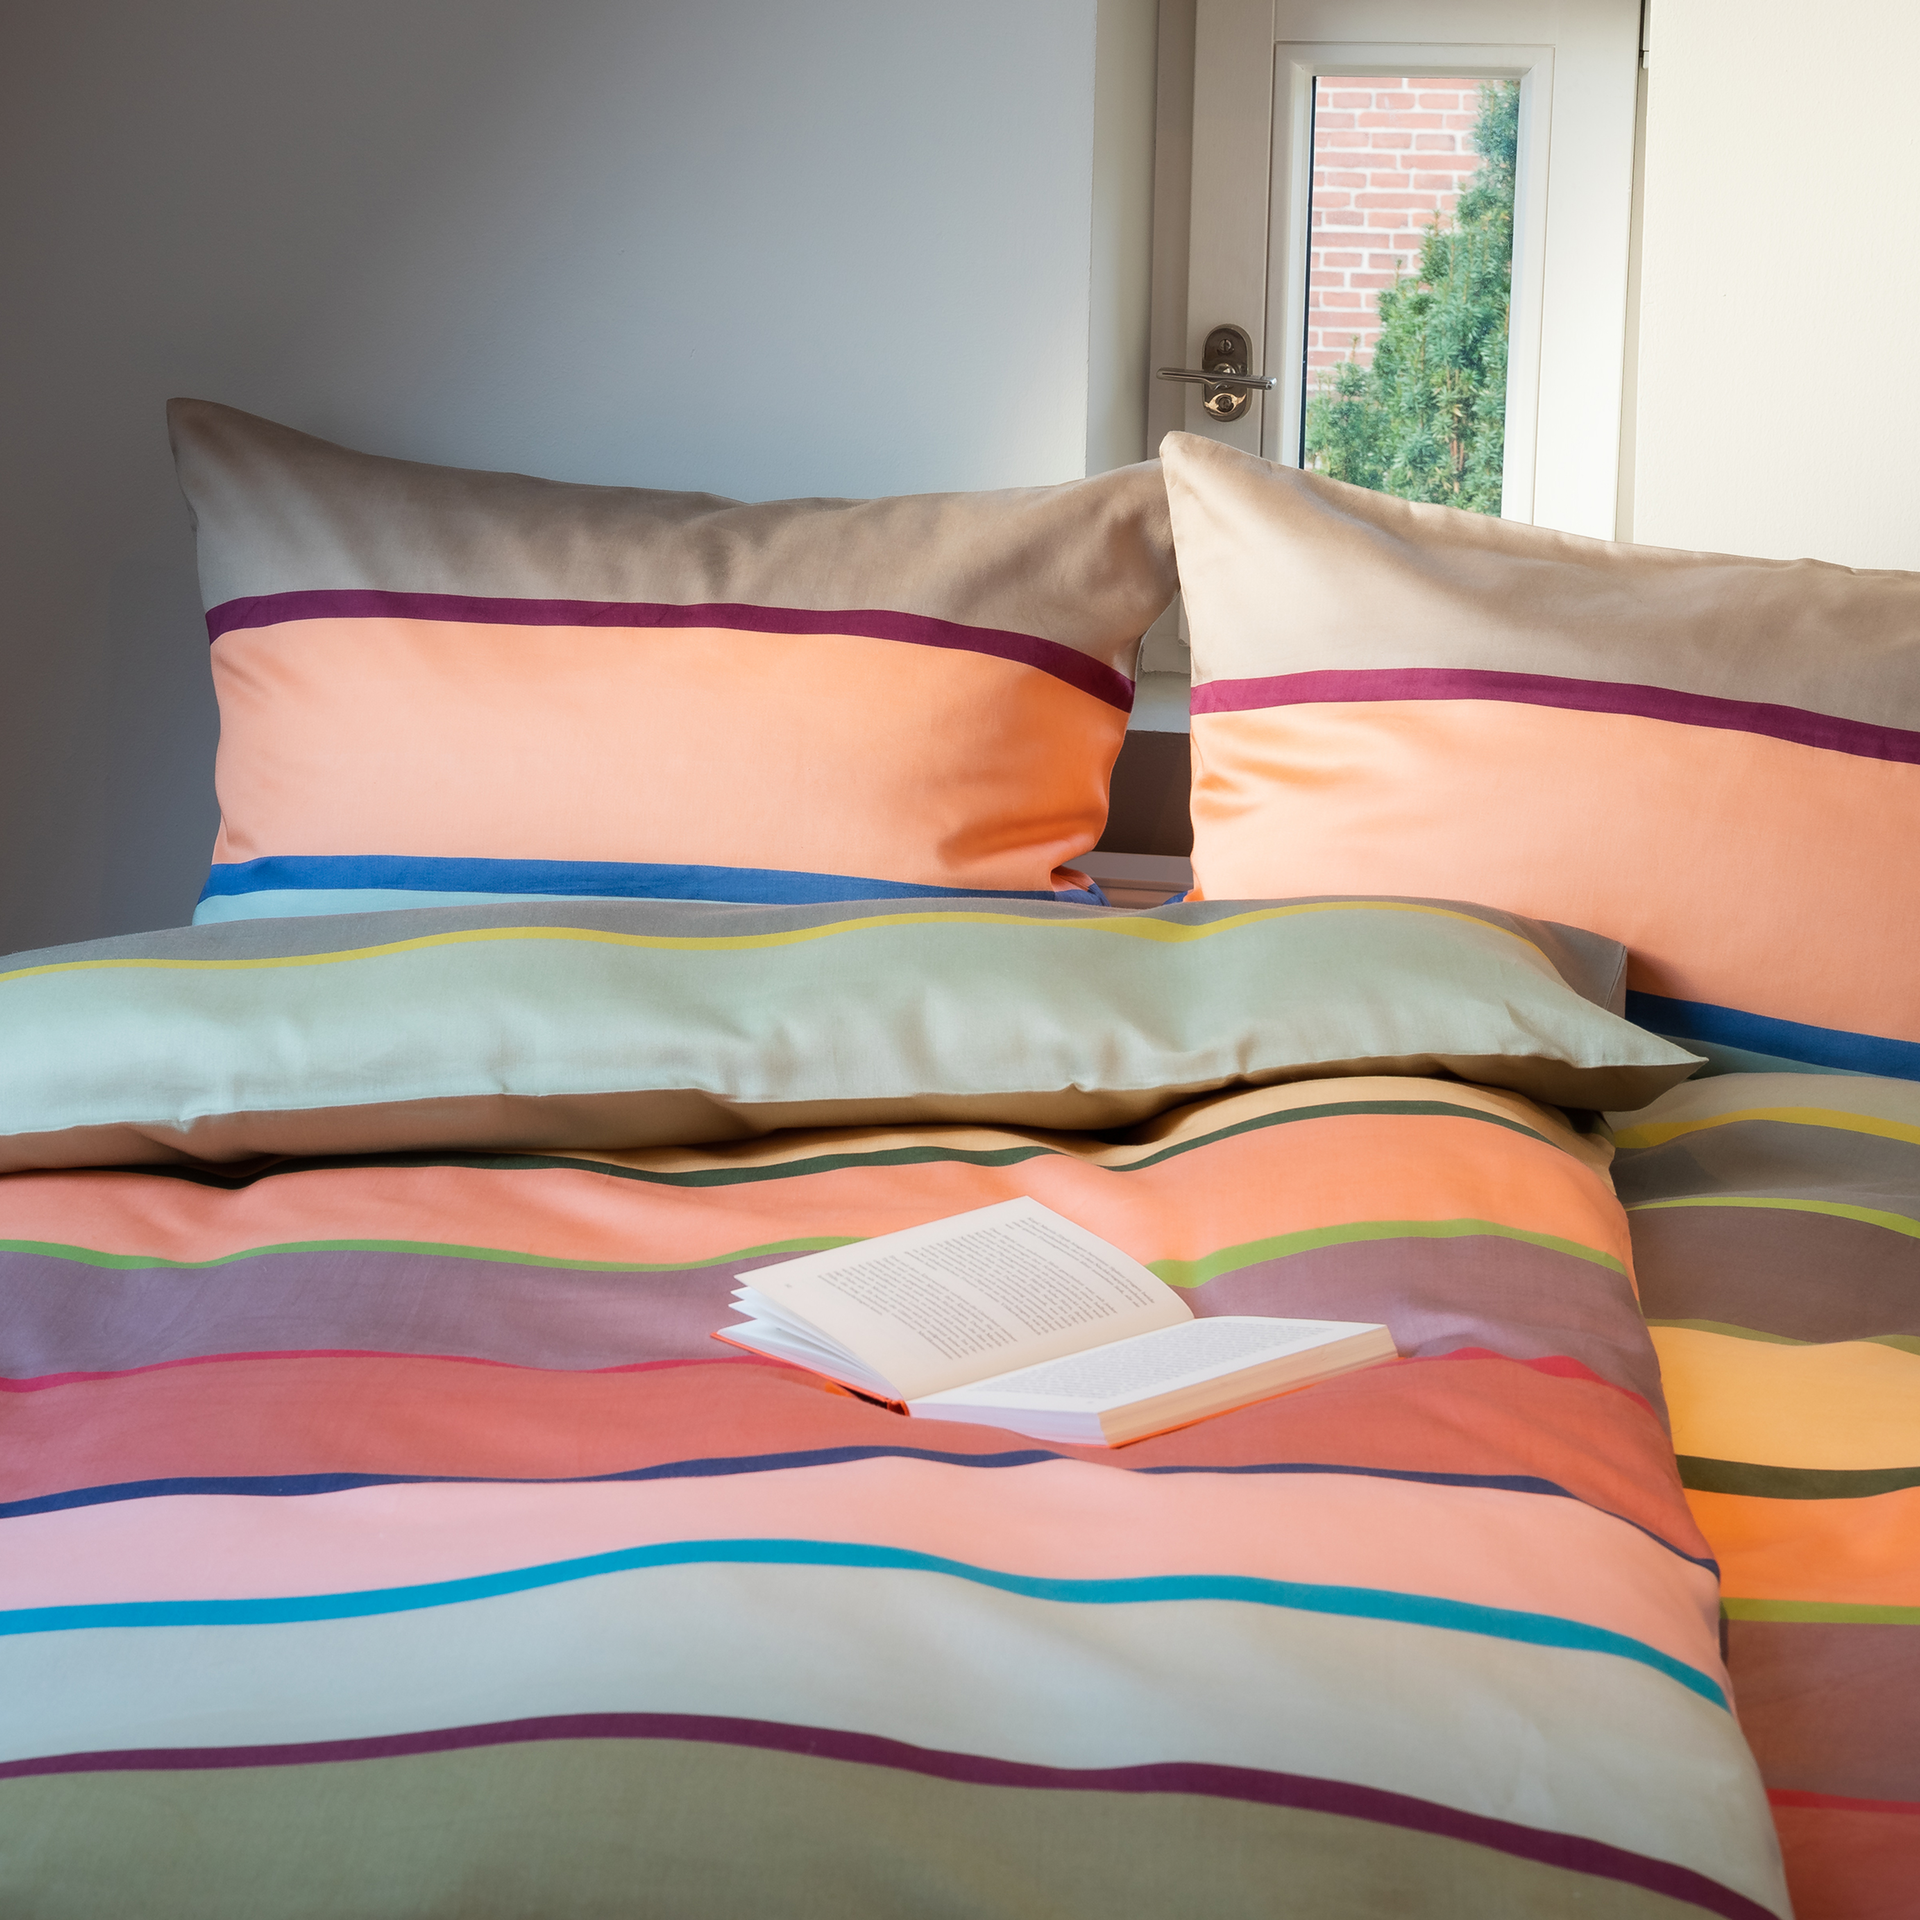 Bed Linen 'Cambridge' 155 x 220 cm